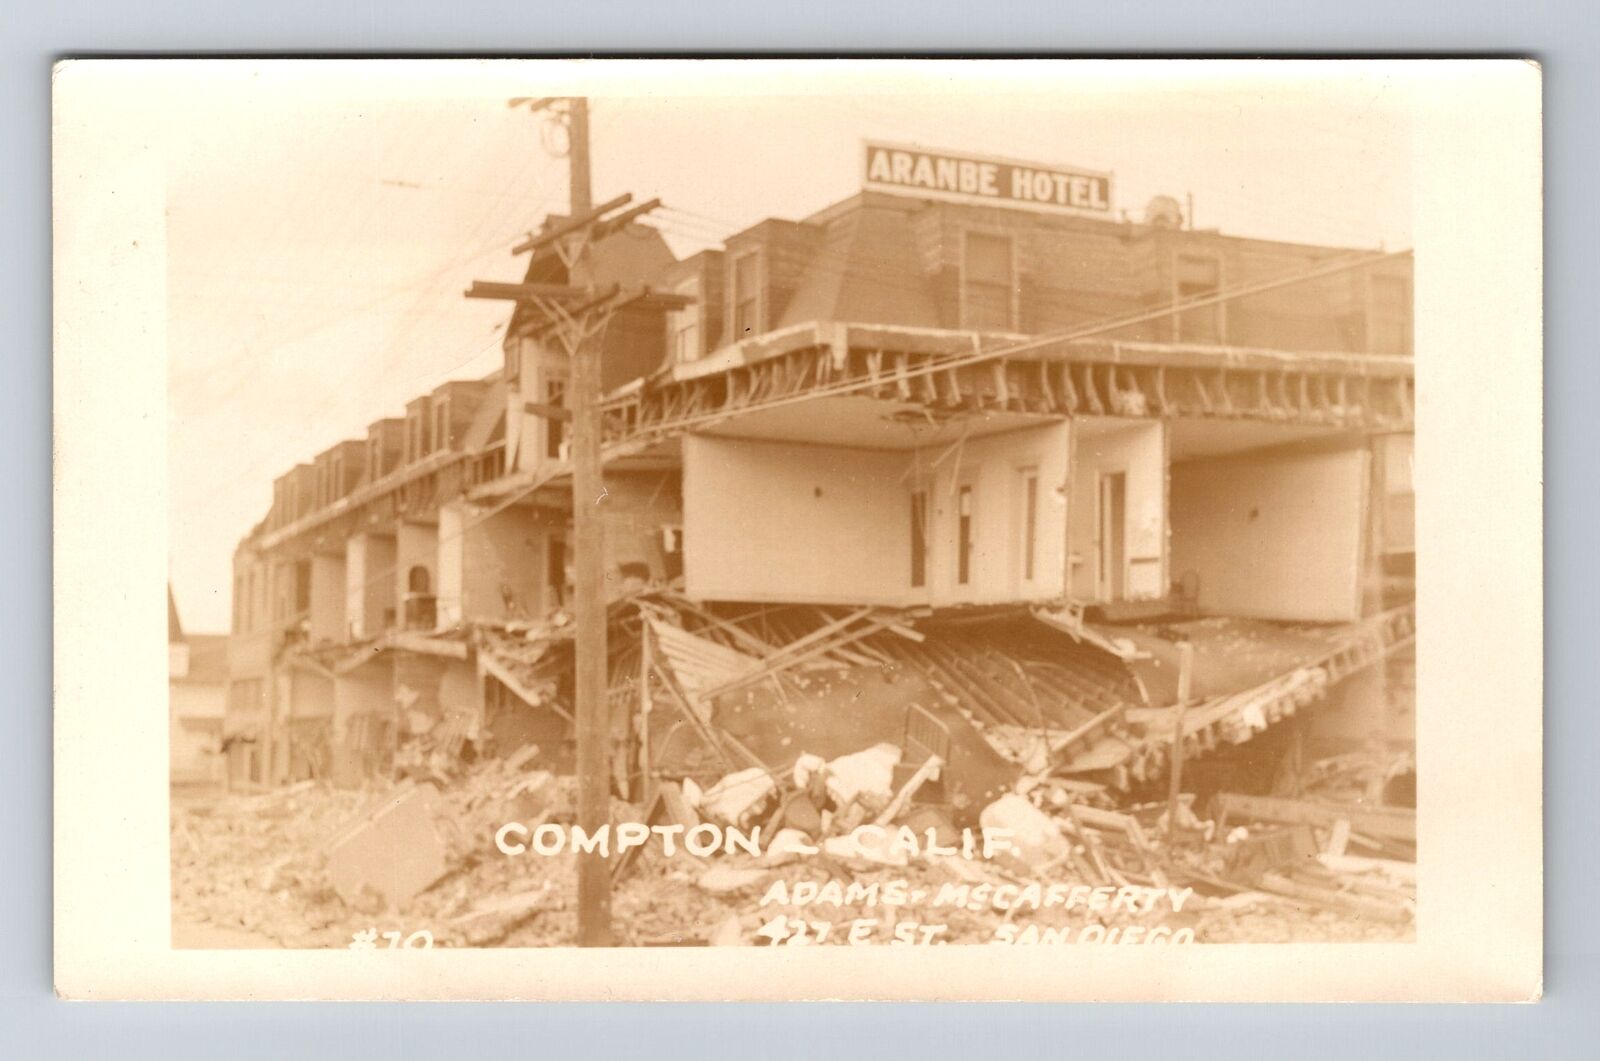 Compton CA-California RPPC Aranbe Hotel 1933 Earthquake Damage Vintage Postcard